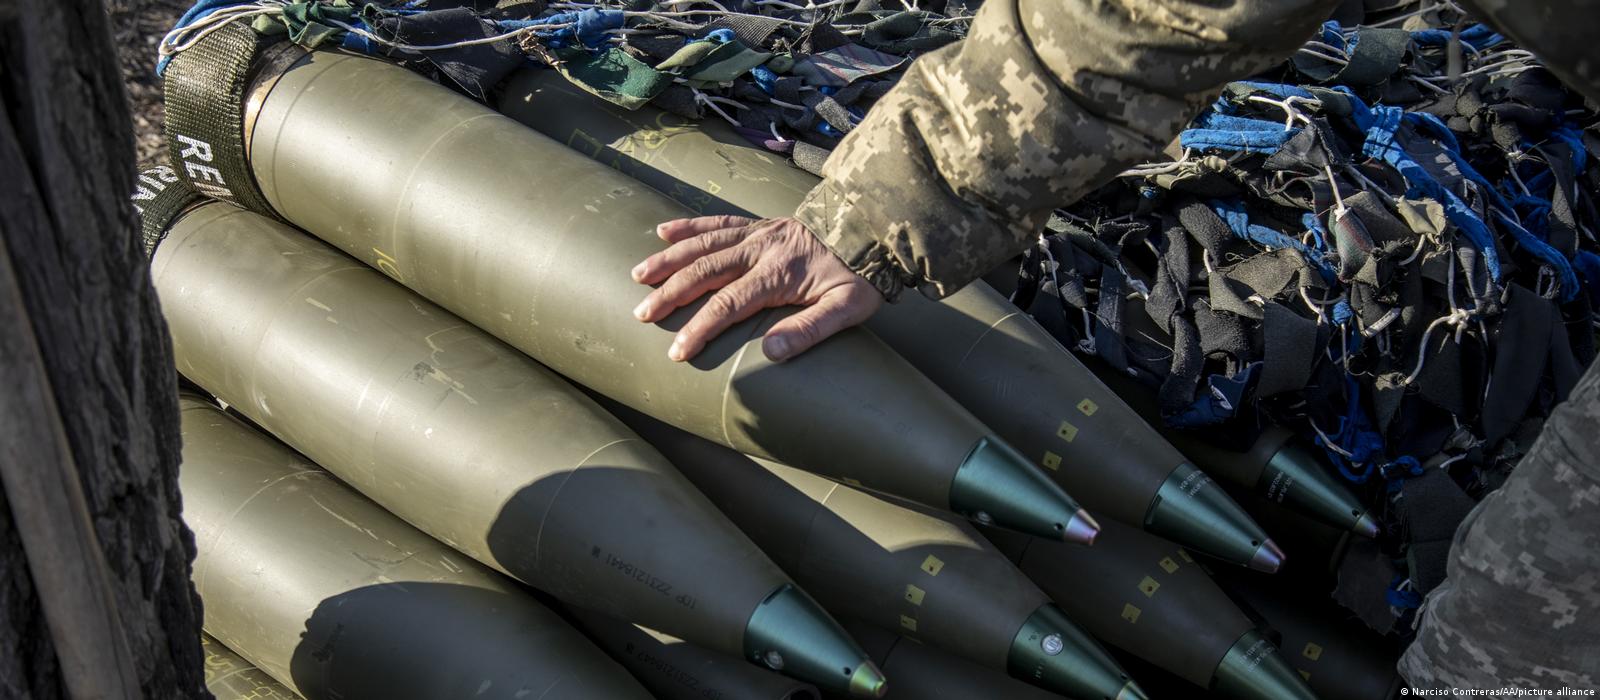 EU approves sending 2 billion euros worth of ammunition to Kiev